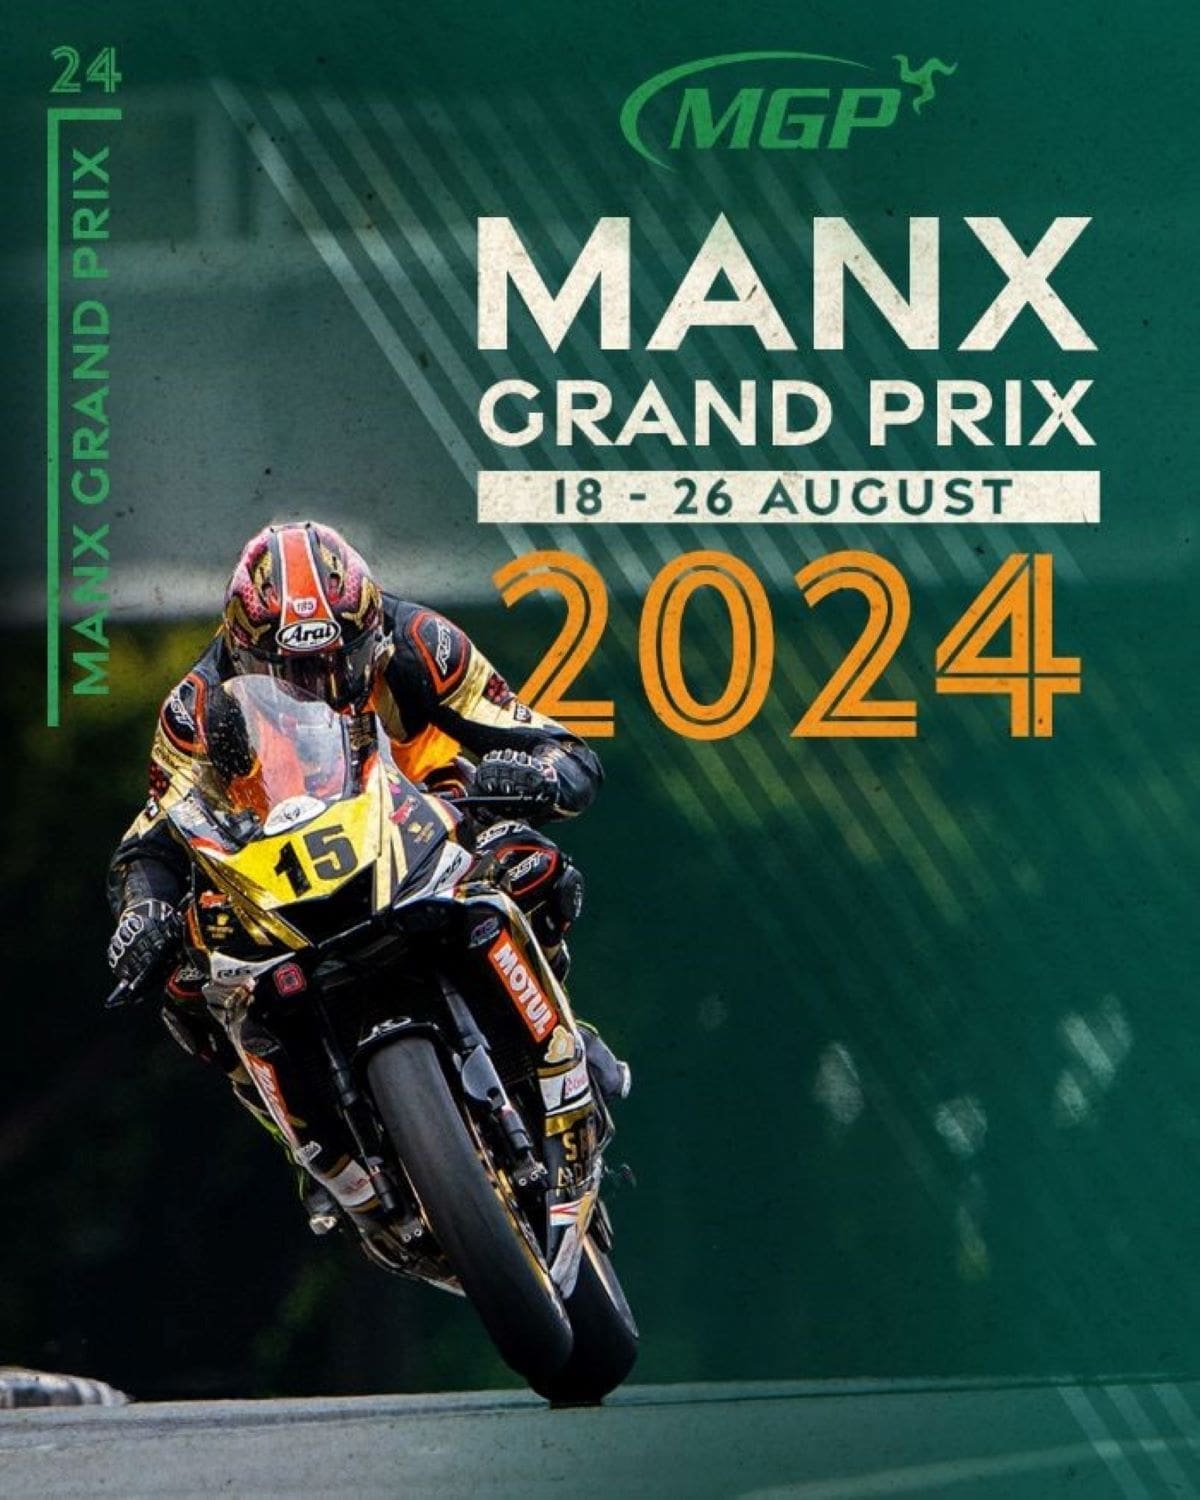 Dates announced for 2024 Manx Grand Prix